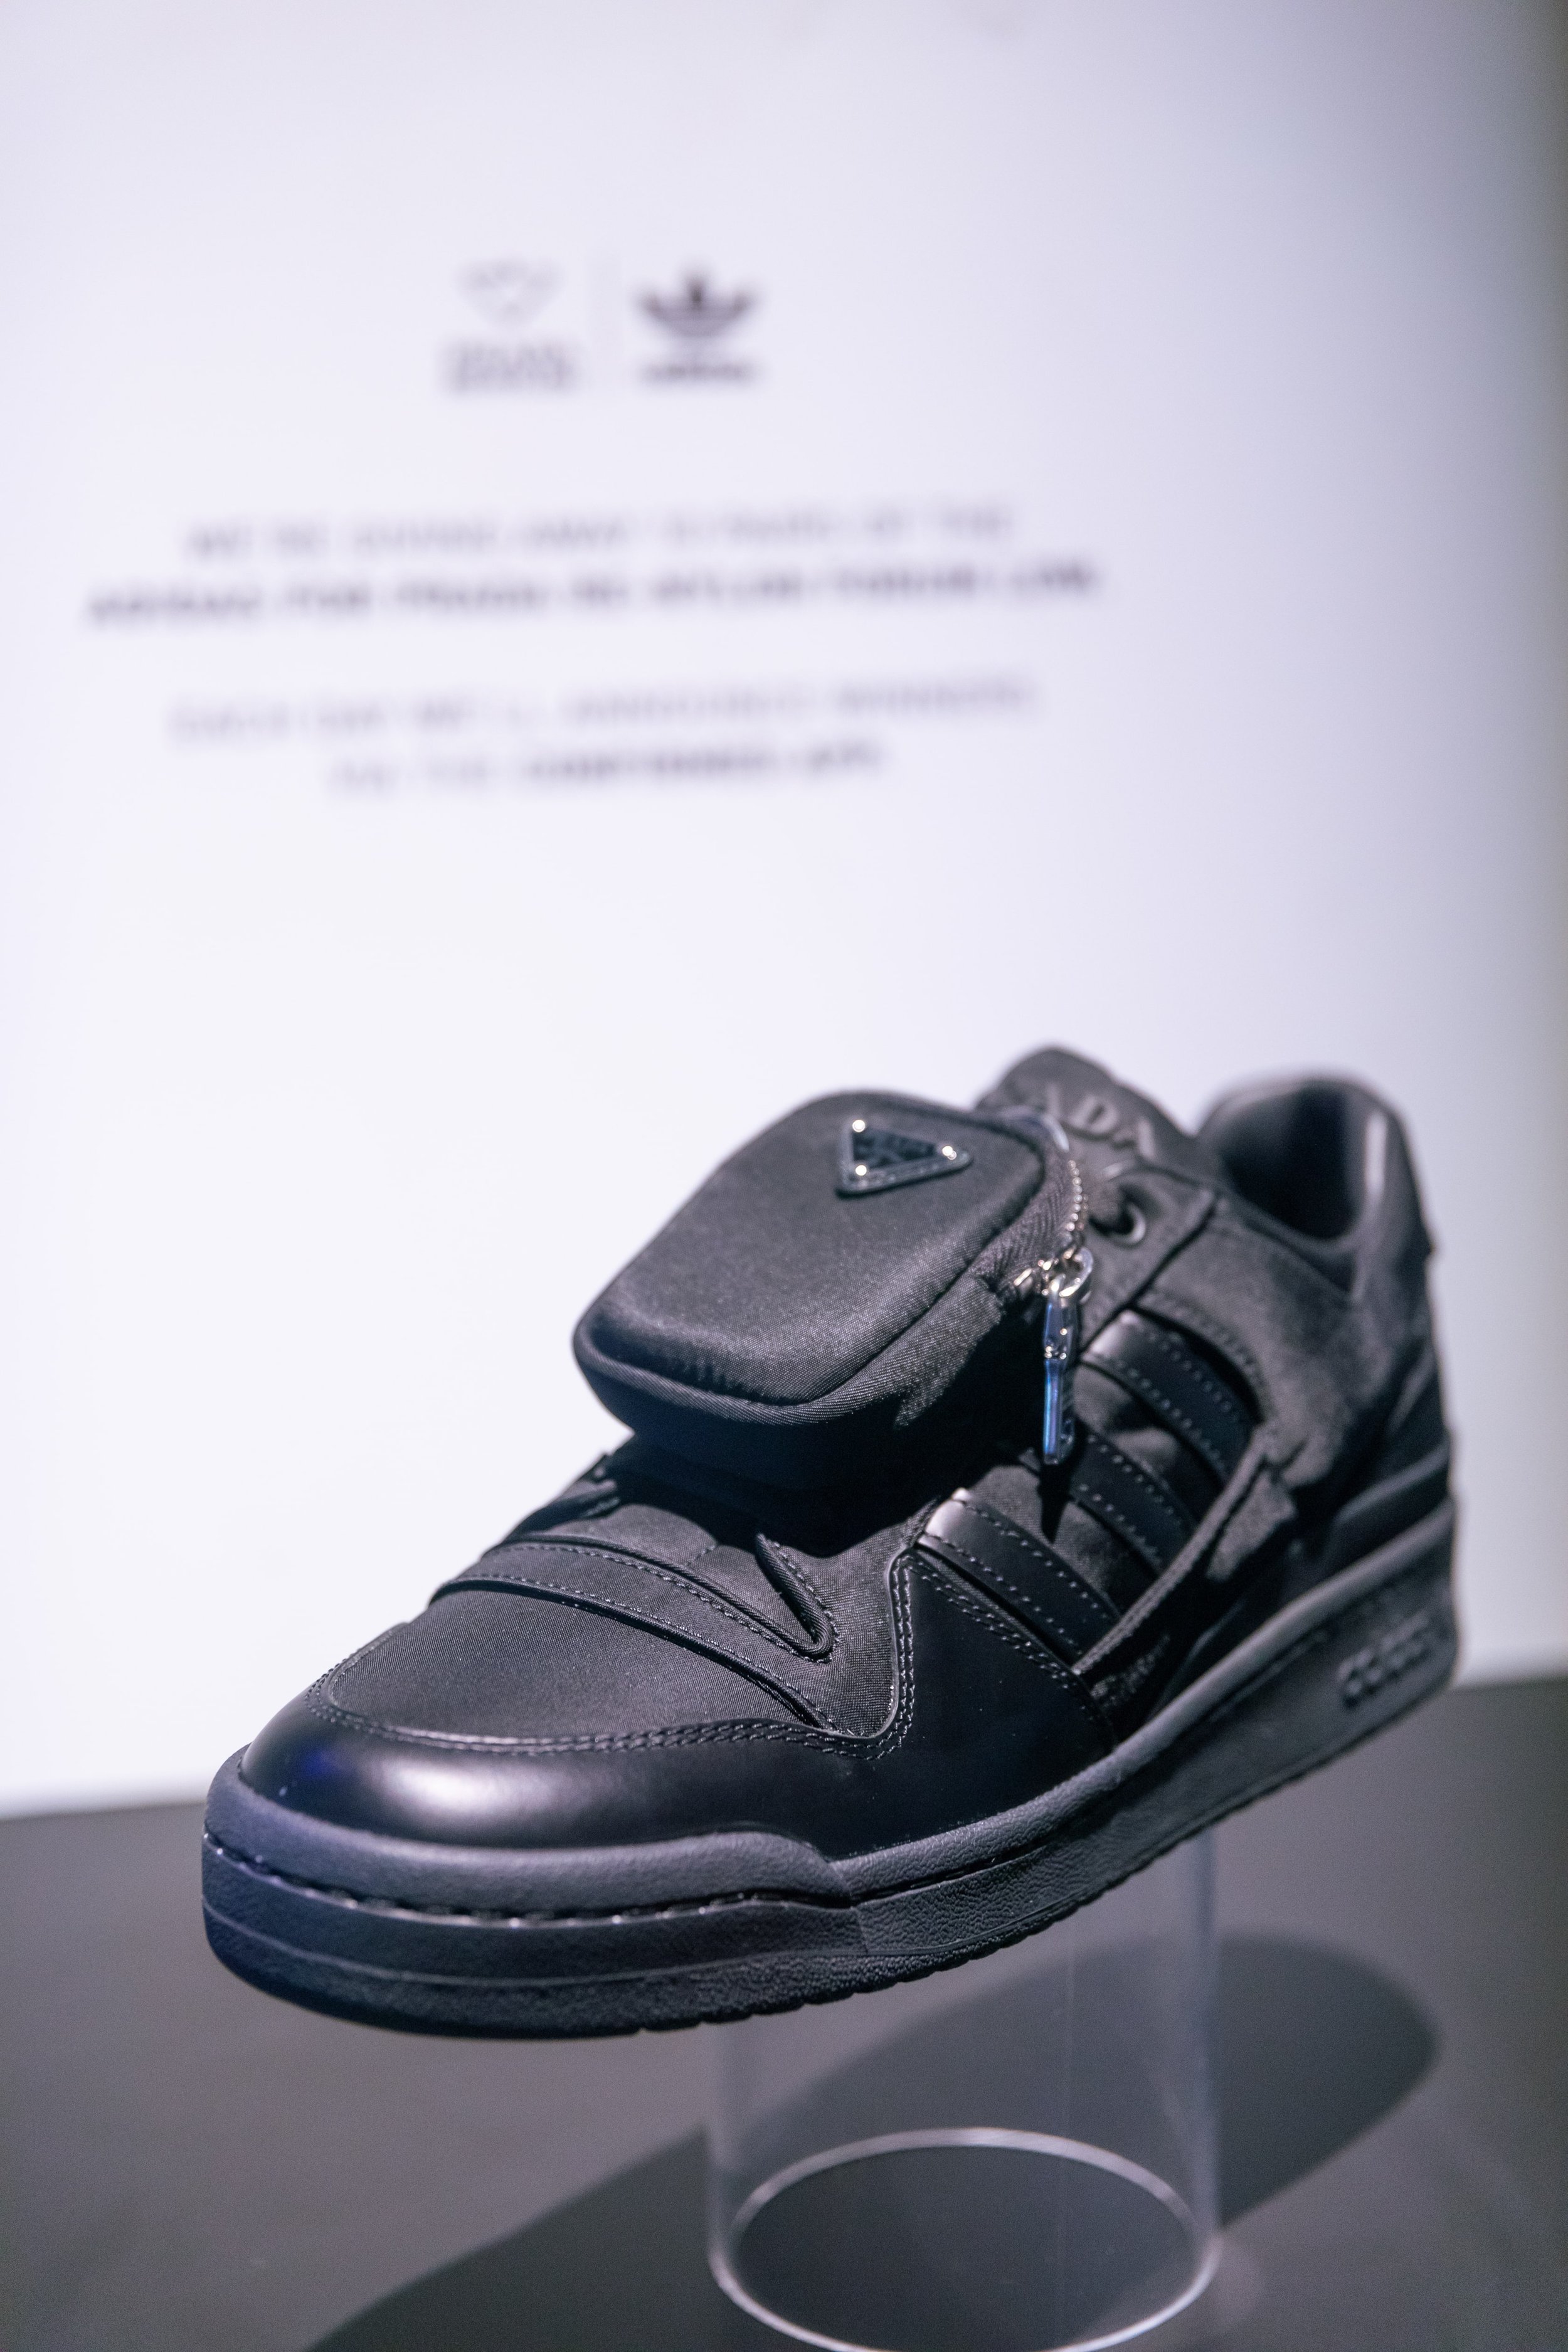 CNK-ComplexCon-Adidas-Prada-forum-close-up-min.jpg